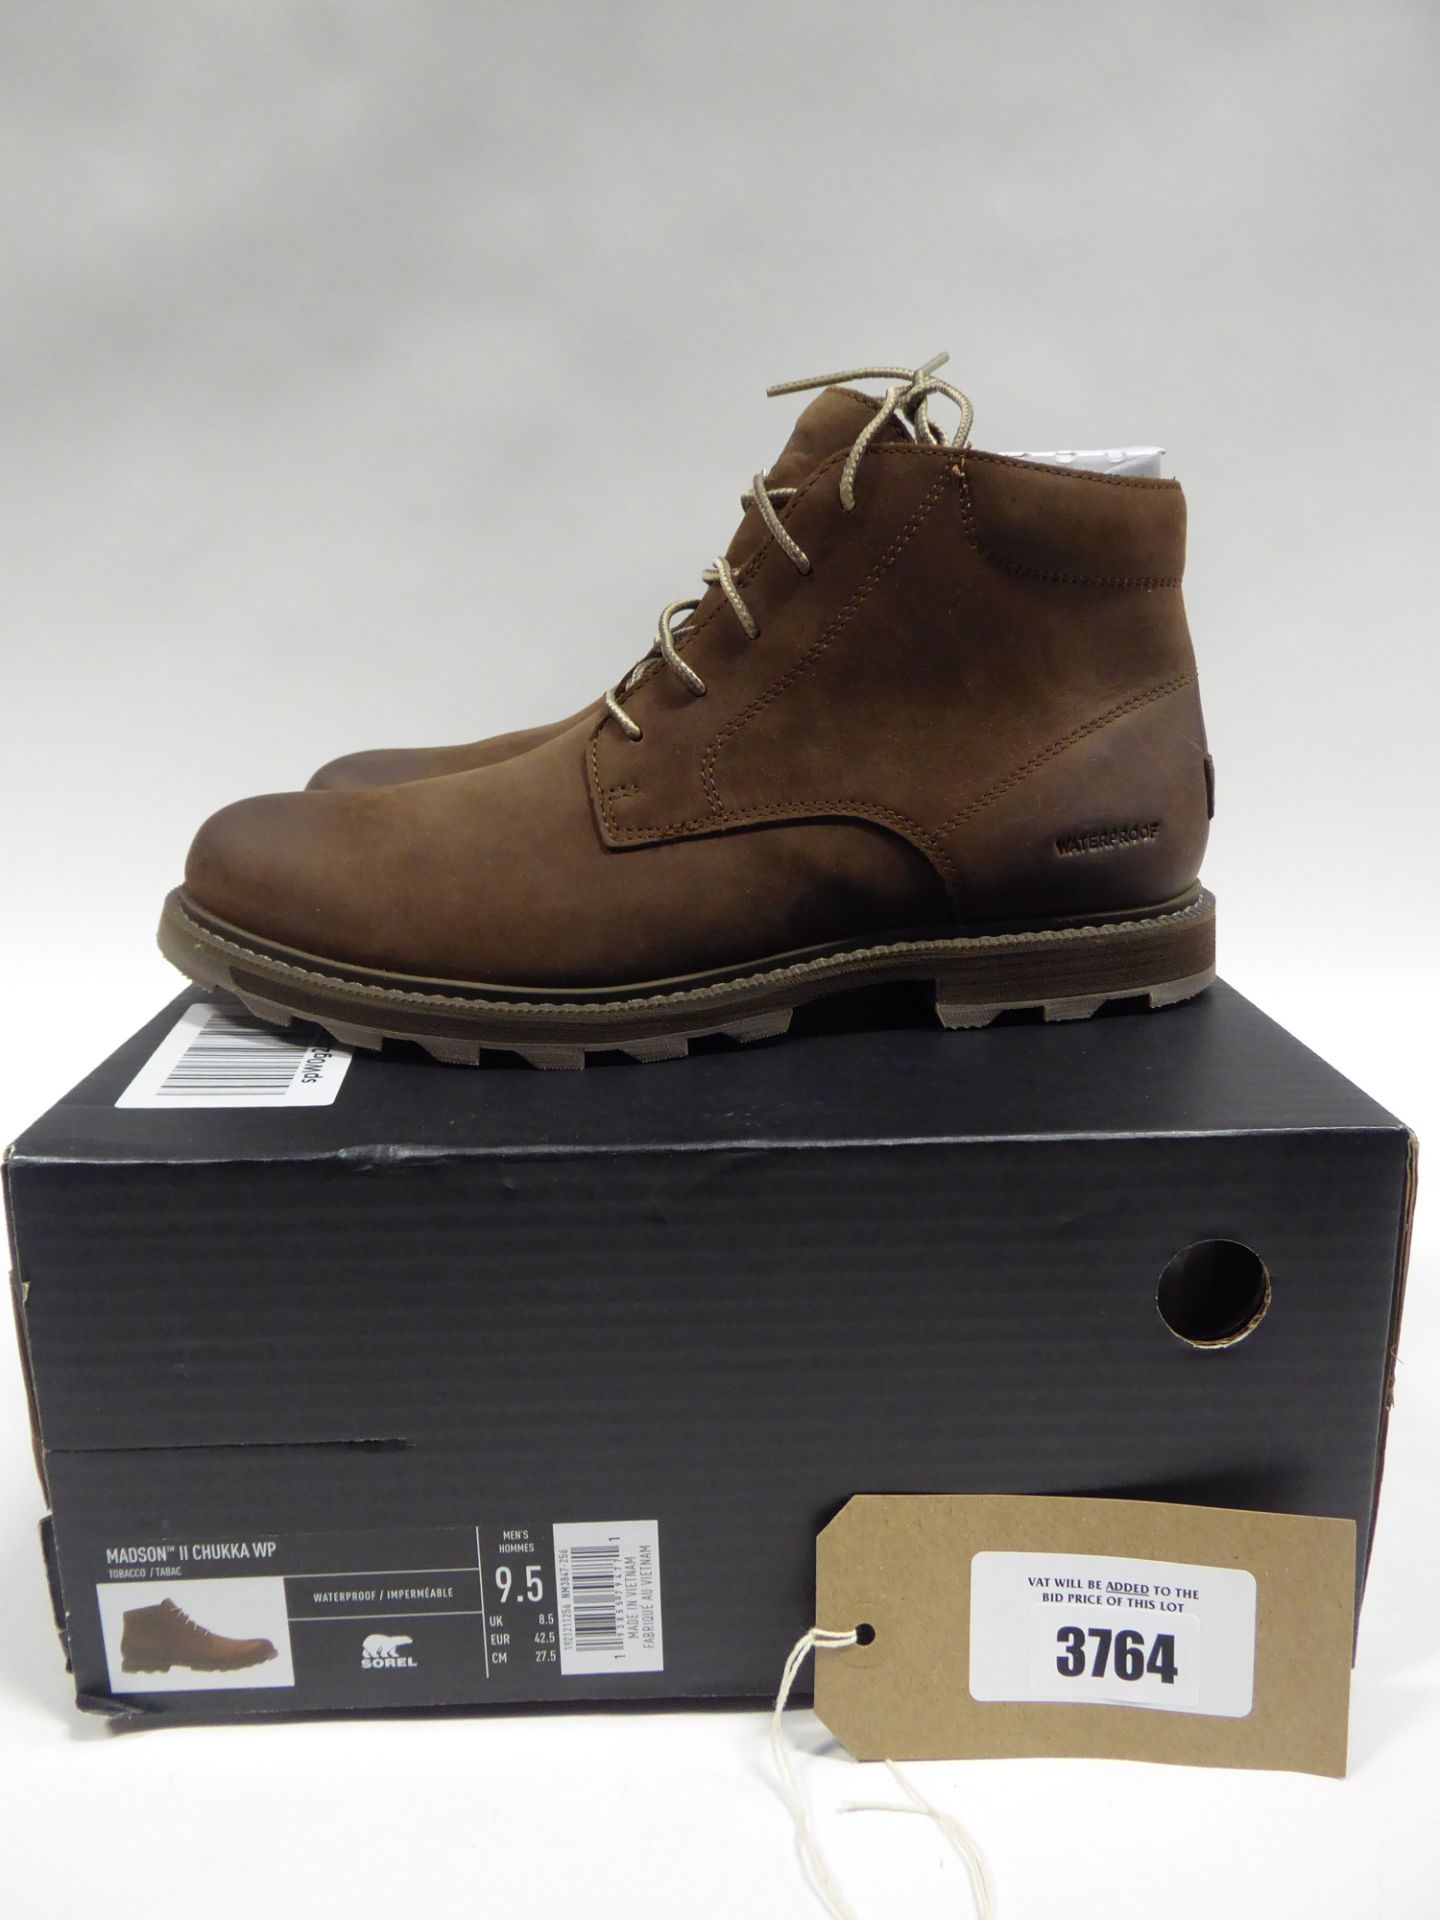 Sorel Madson II Chukka waterproof boots size 8.5